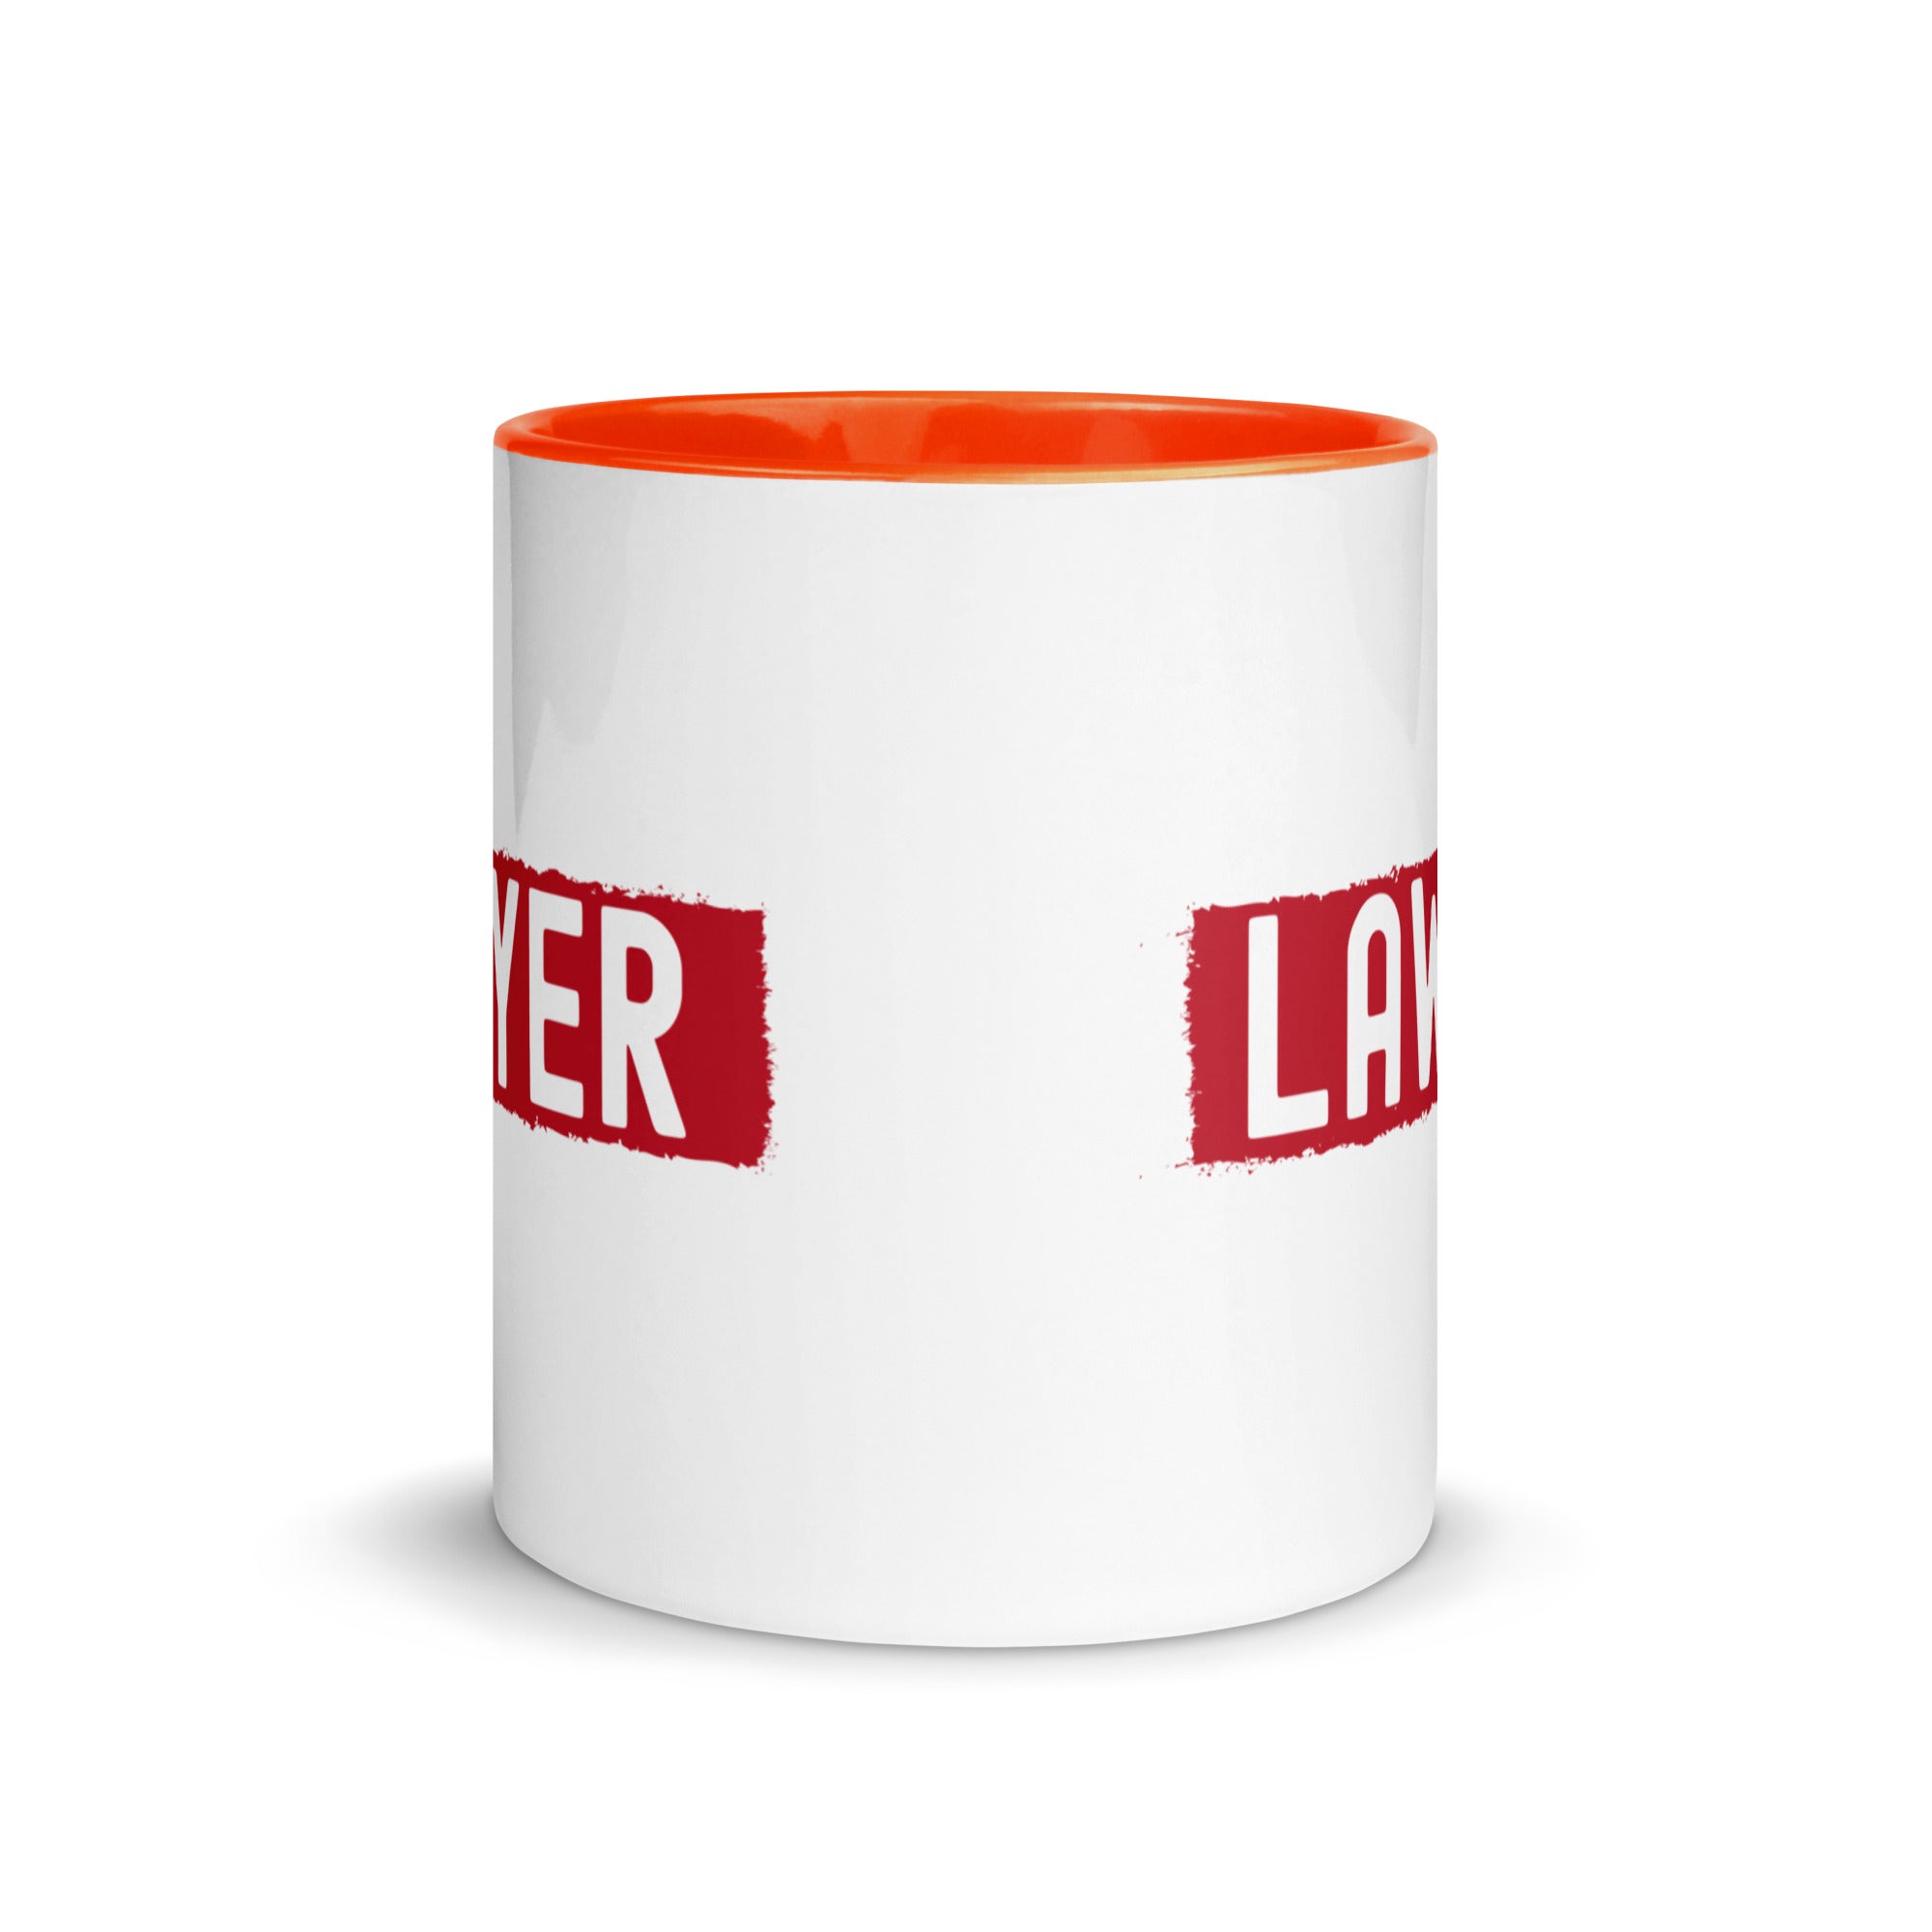 Mug with Color Inside | Lawyer (design with red highghliting)